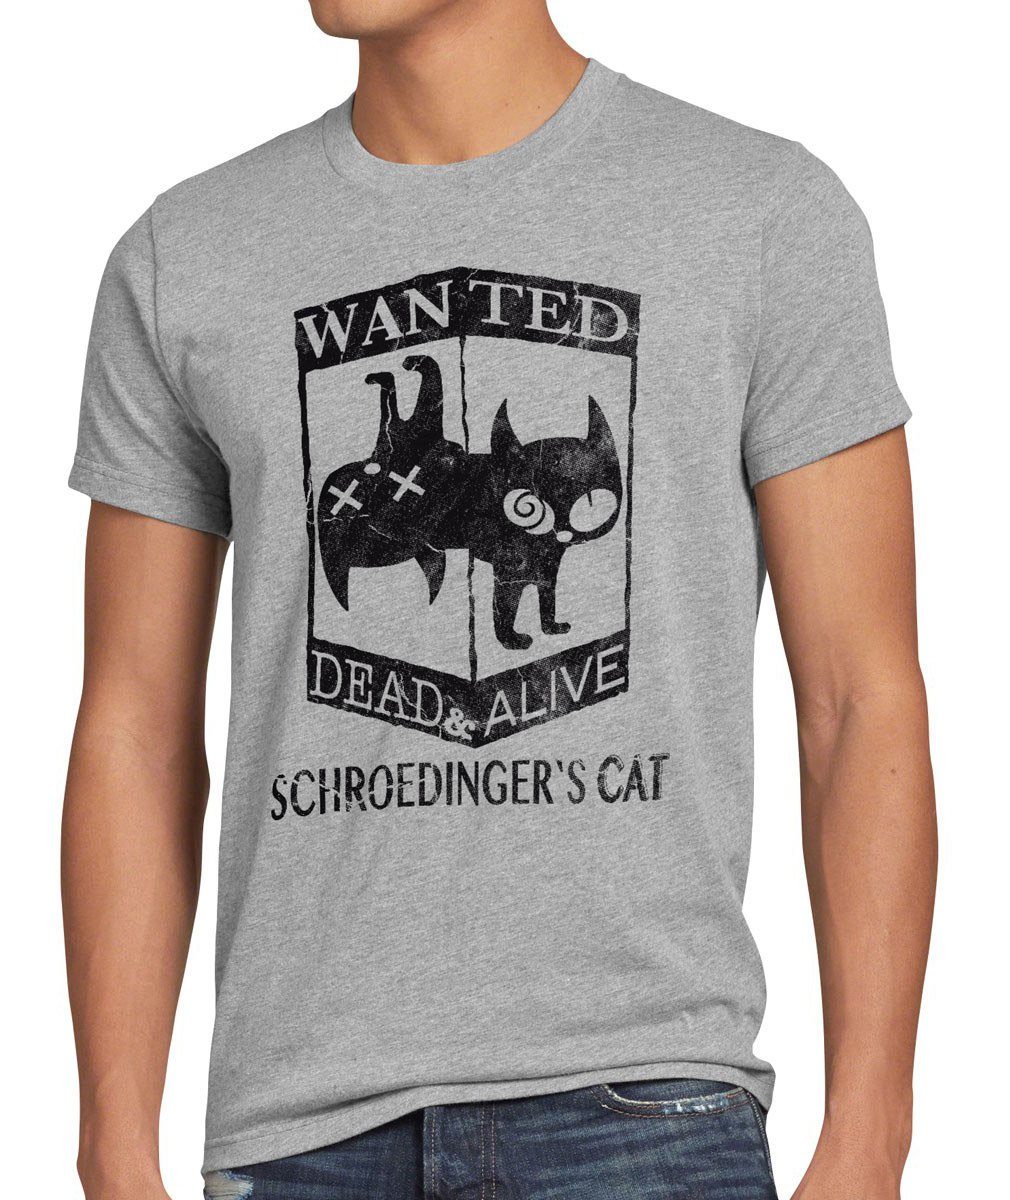 style3 Print-Shirt Herren T-Shirt Wanted Schroedingers Katze big sheldon bang cooper cat theory top grau meliert